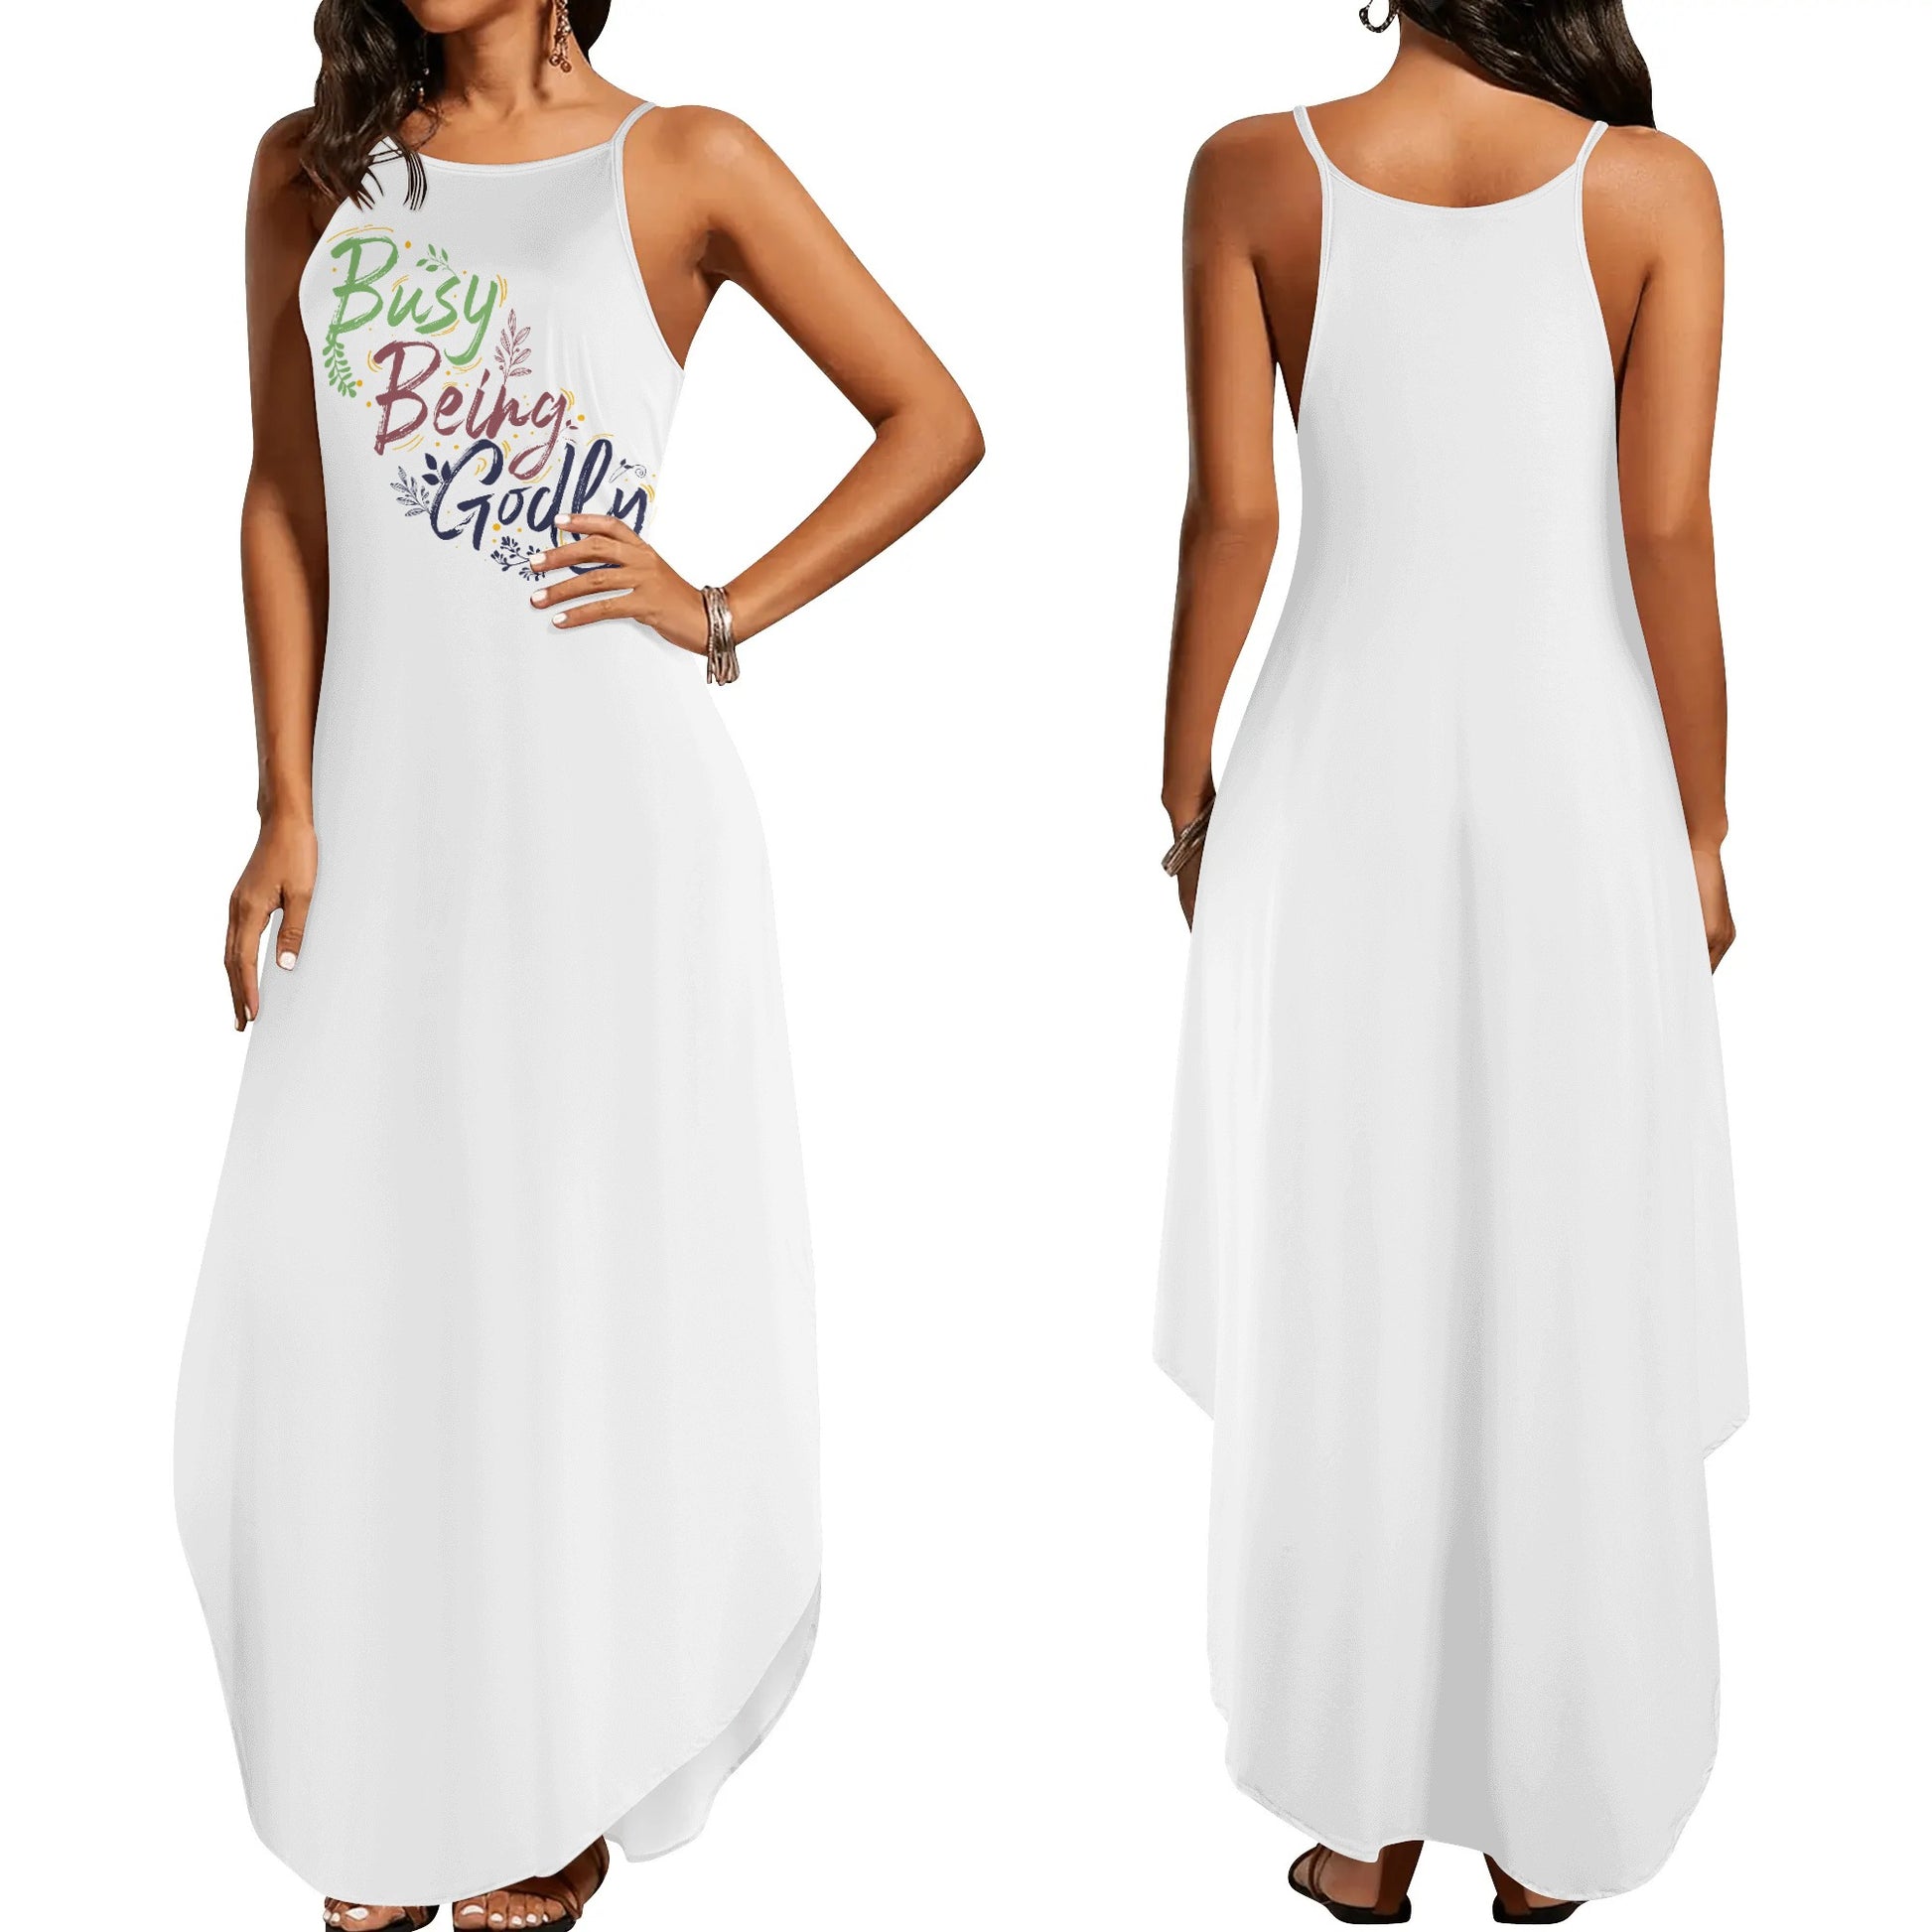 Busy Being Godly Womens Christian Elegant Sleeveless Summer Maxi Dress popcustoms